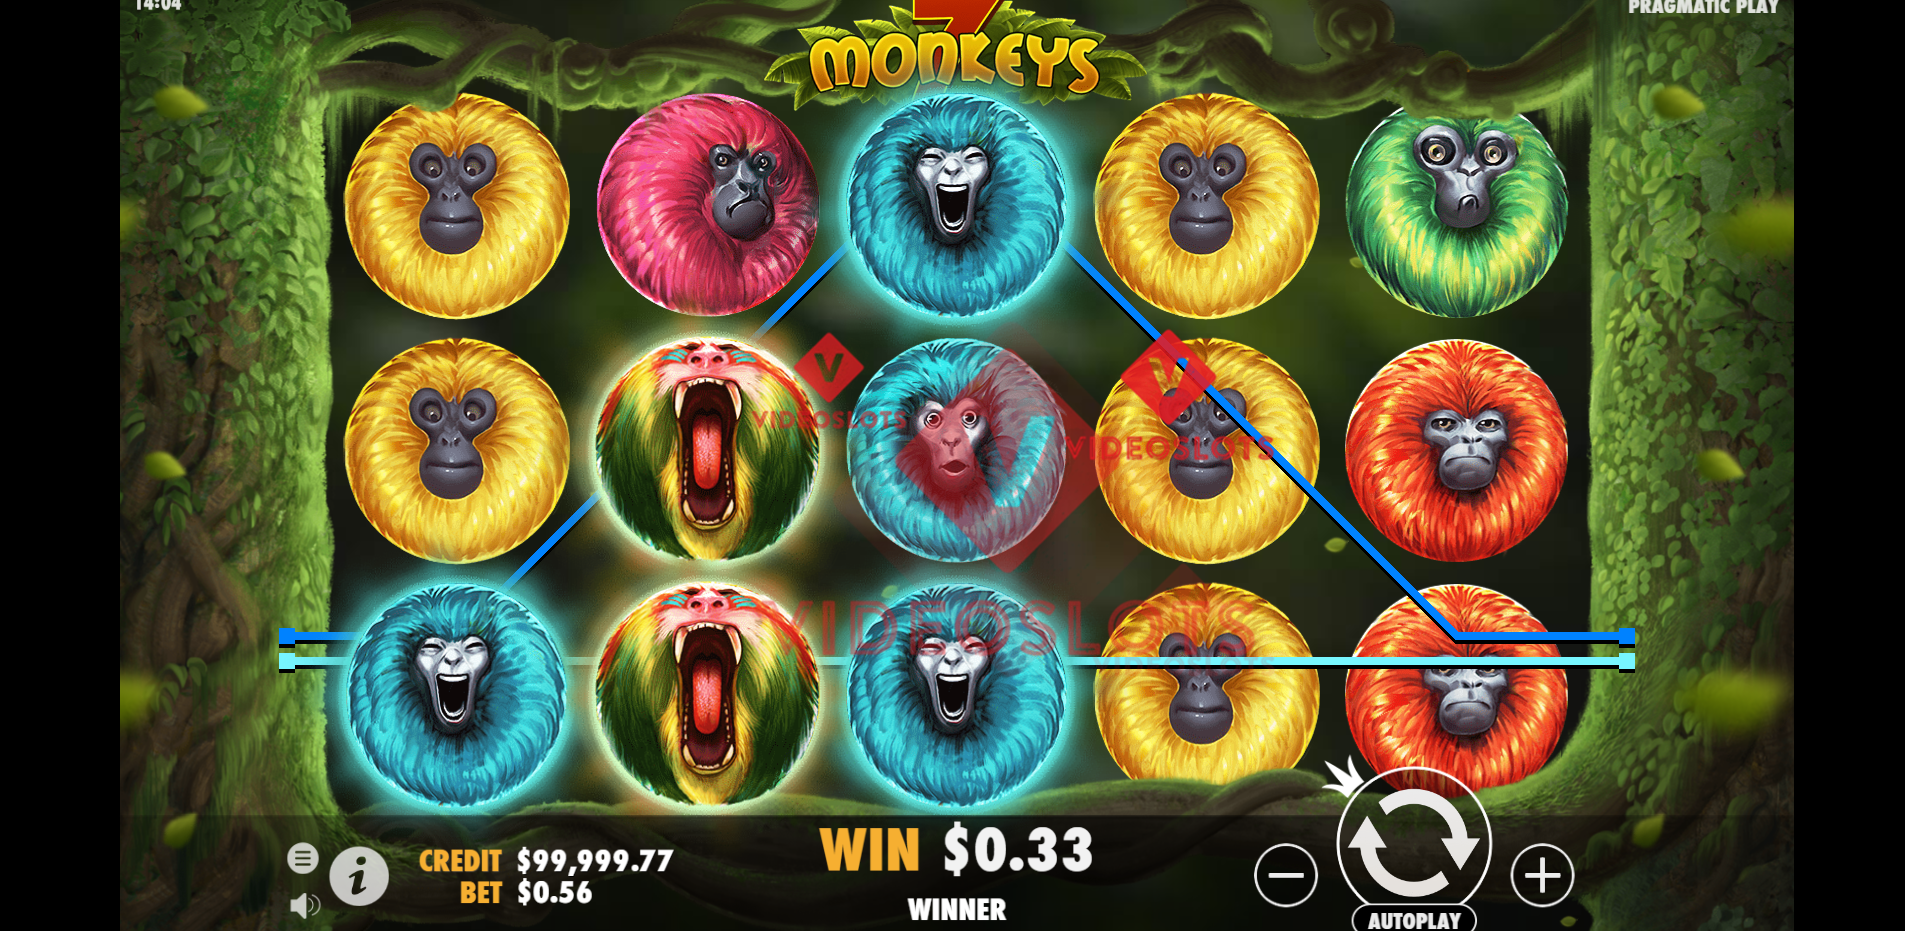 Base Game for 7 Monkeys slot by Pragmatic Play